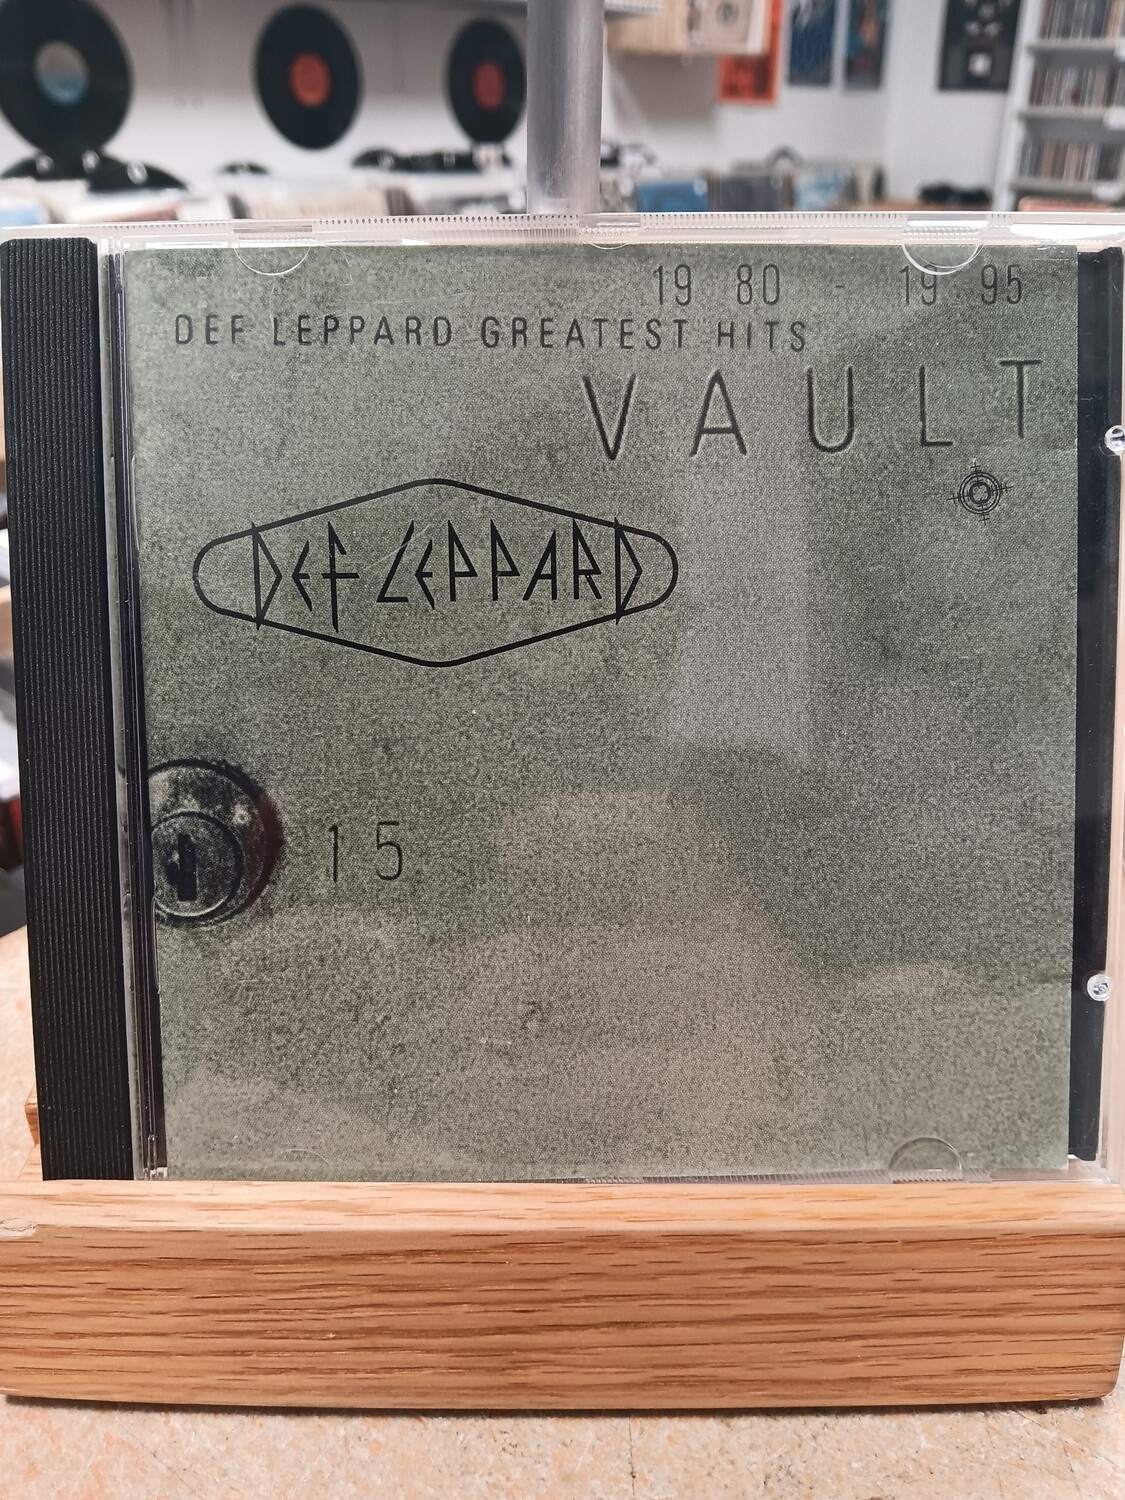 Def Leppard - Vault Greatest Hits (CD)